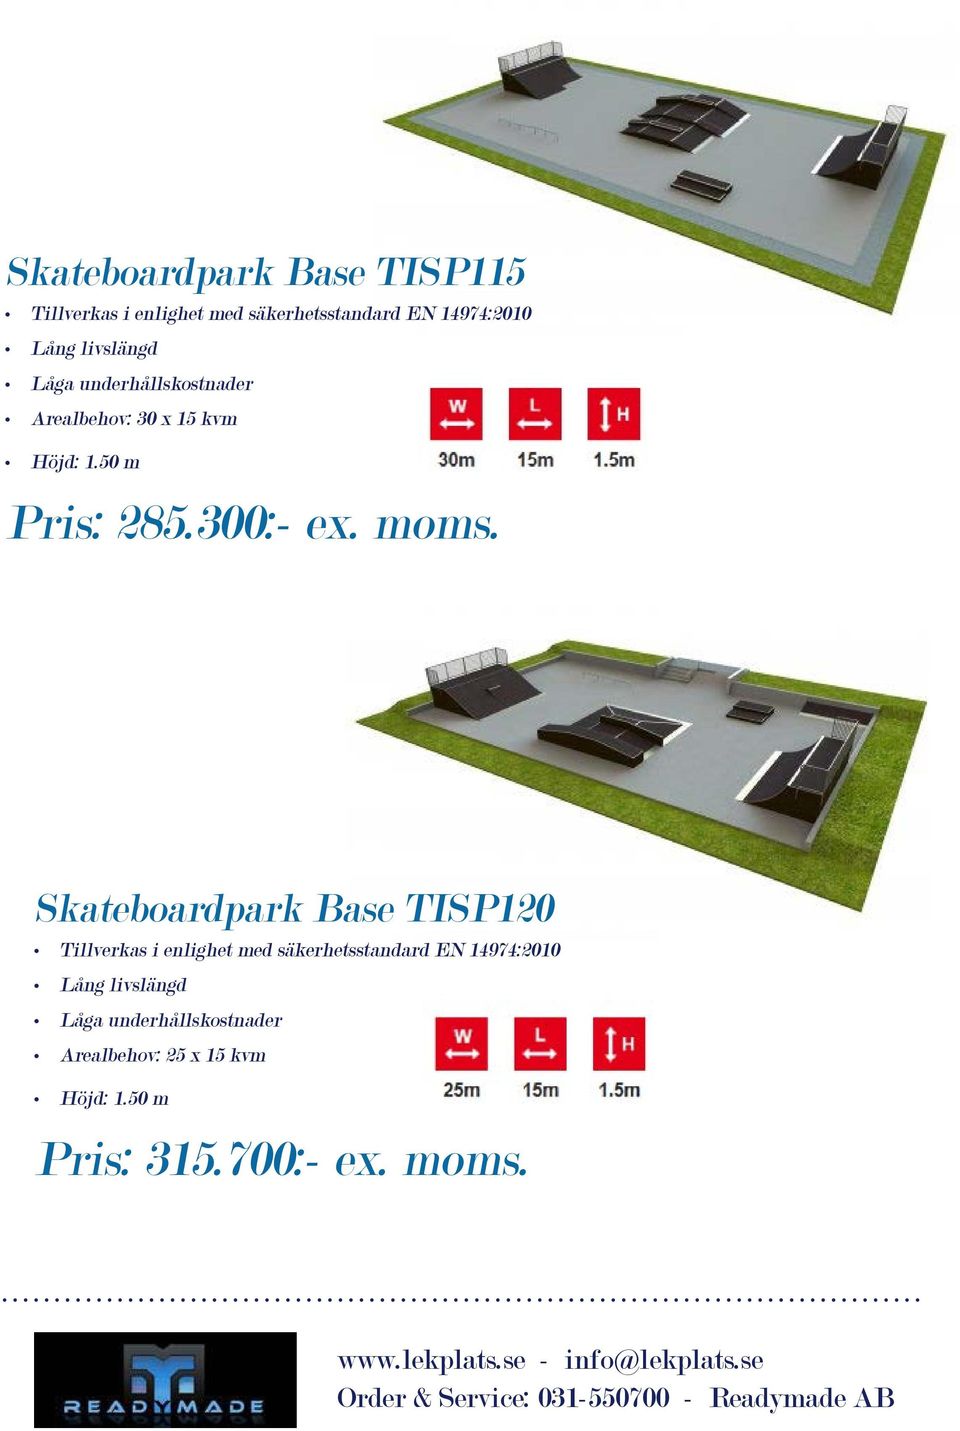 Skateboardpark Base TISP120 Arealbehov: 25 x